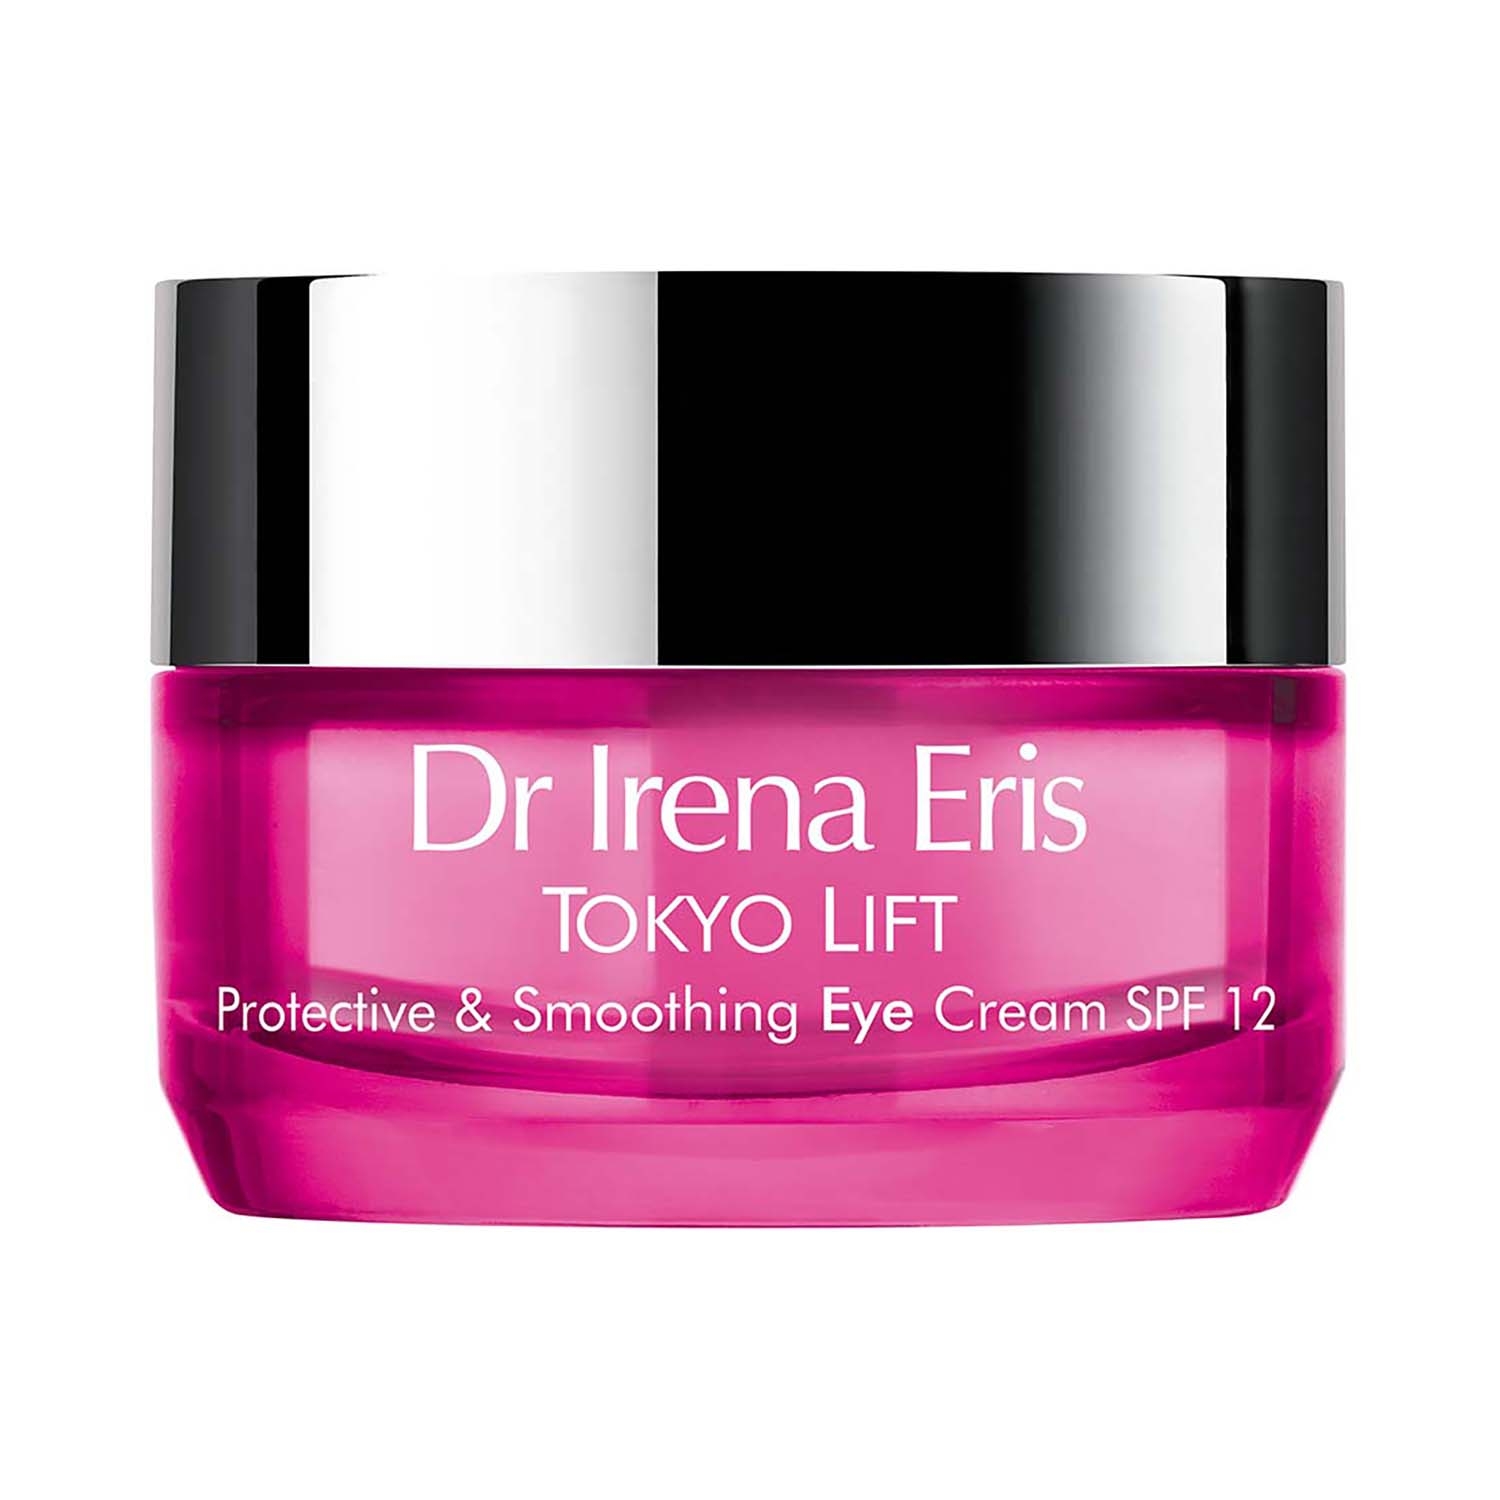 Dr Irena Eris | Dr Irena Eris Tokyo Lift Protective & Smoothing Eye Cream SPF 12 (15ml)